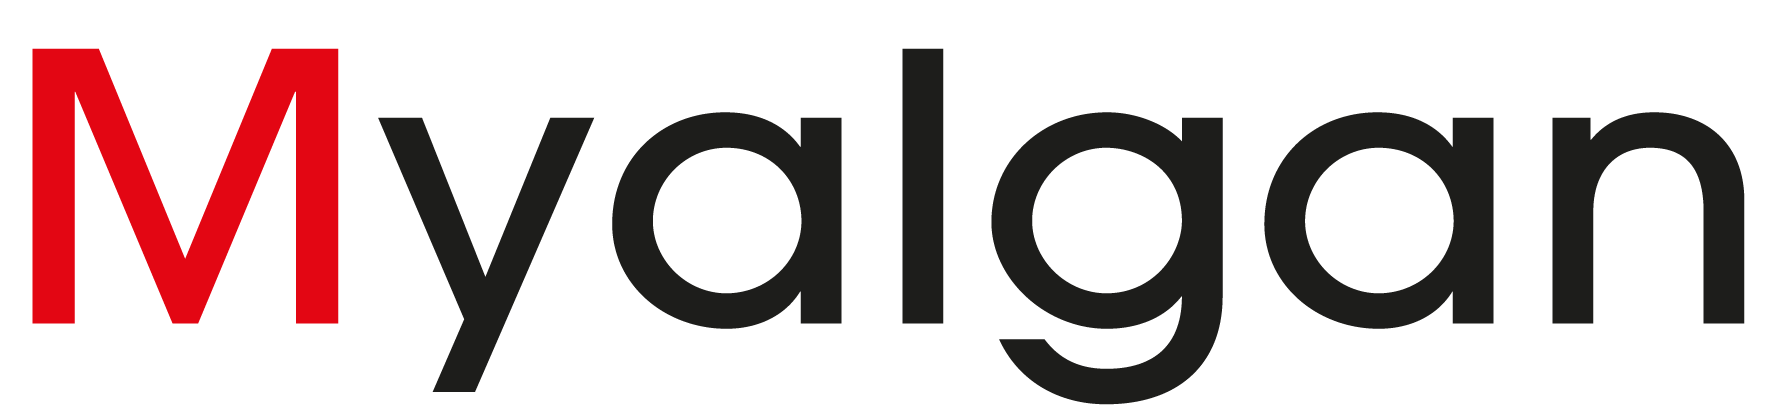 myalgan-logotype